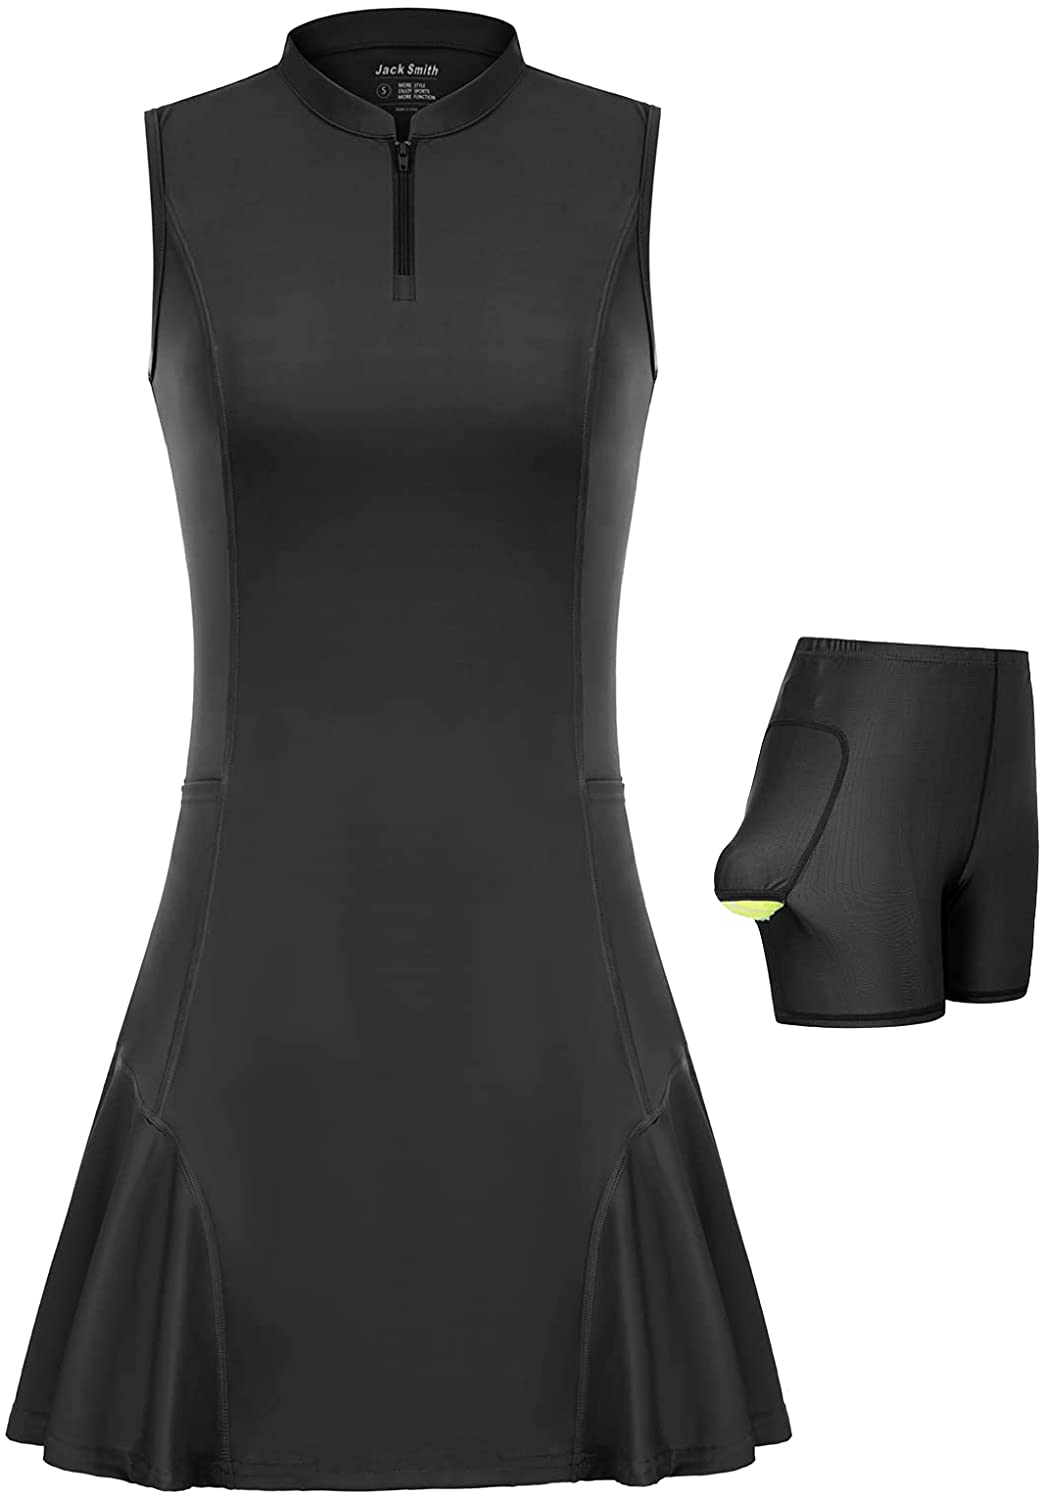 JACK SMITH Women Athletic Dress with Shorts Sleeveless Golf Tennis Dress  Pockets | eBay